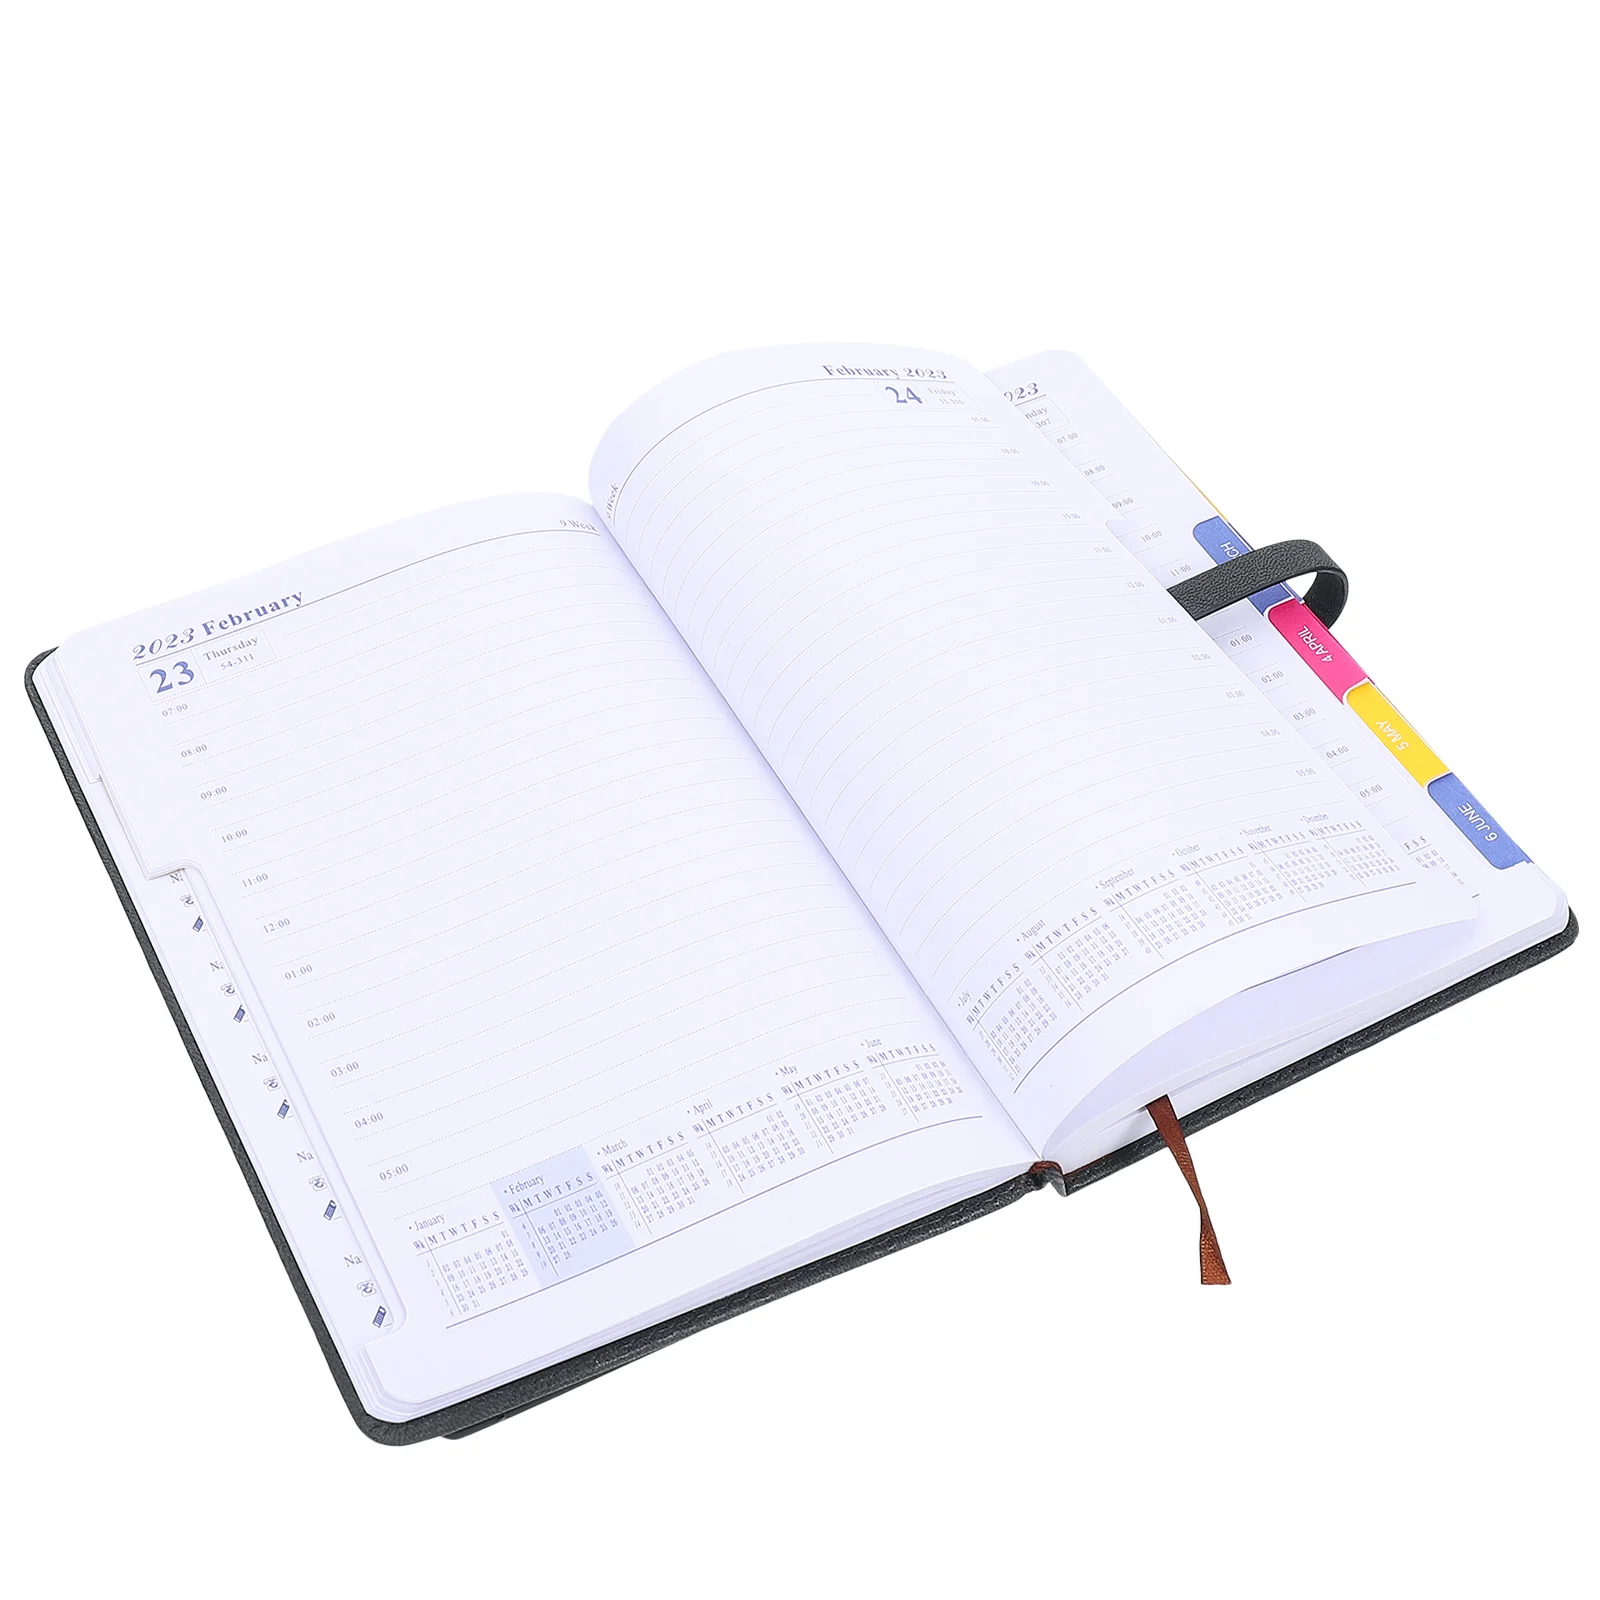 2023 Plan Book Travel Notebook Daily Plan Notepad Calendar Book College Writing Journal Paper Daily Planning Calendar Student